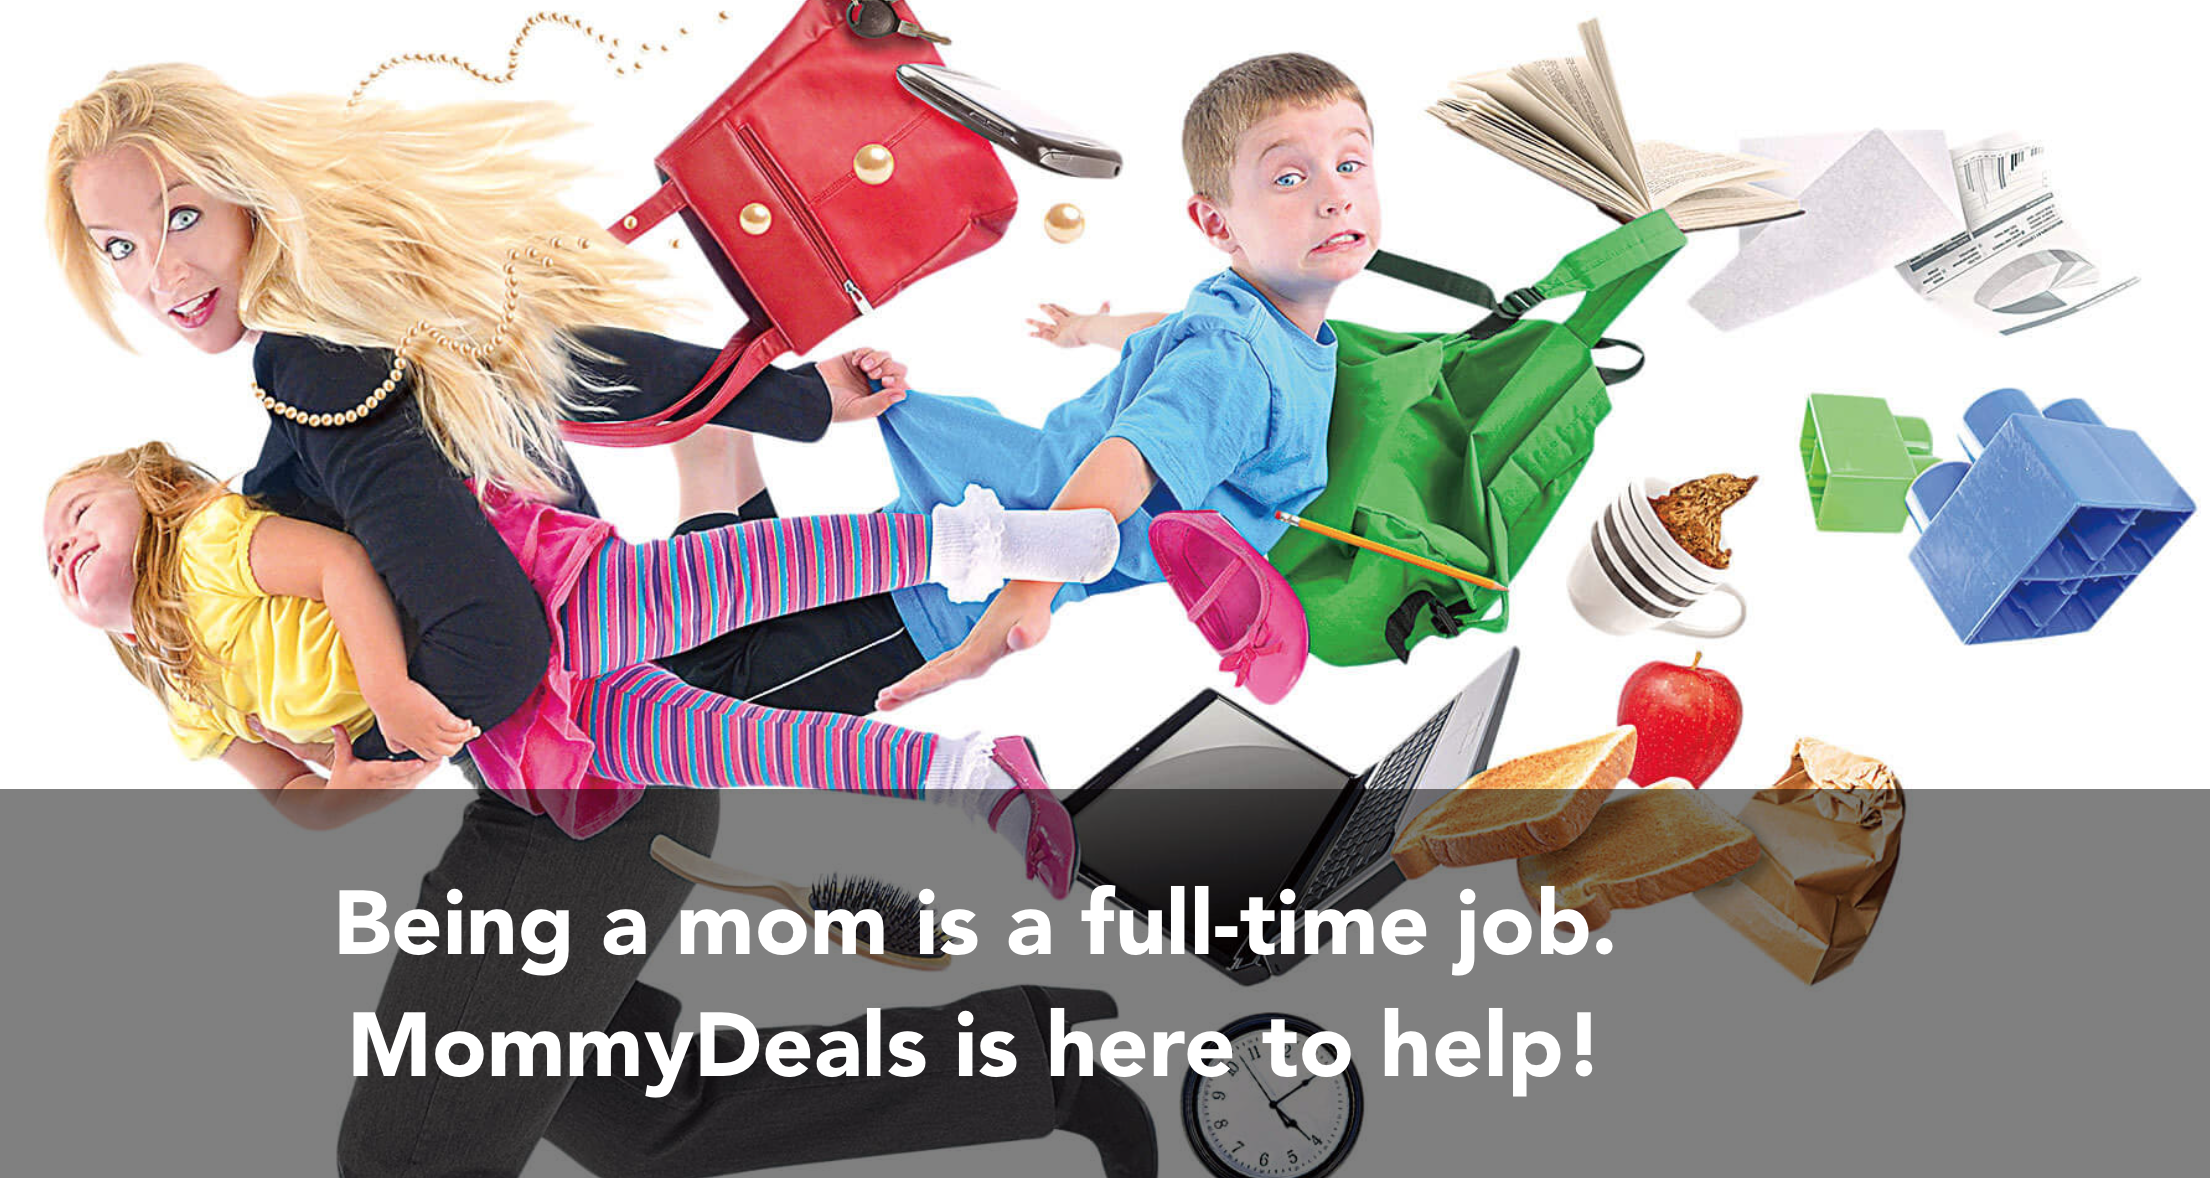 MommyDeals: Saving Families Time and Money Miami Moms Blog Becky Salgado